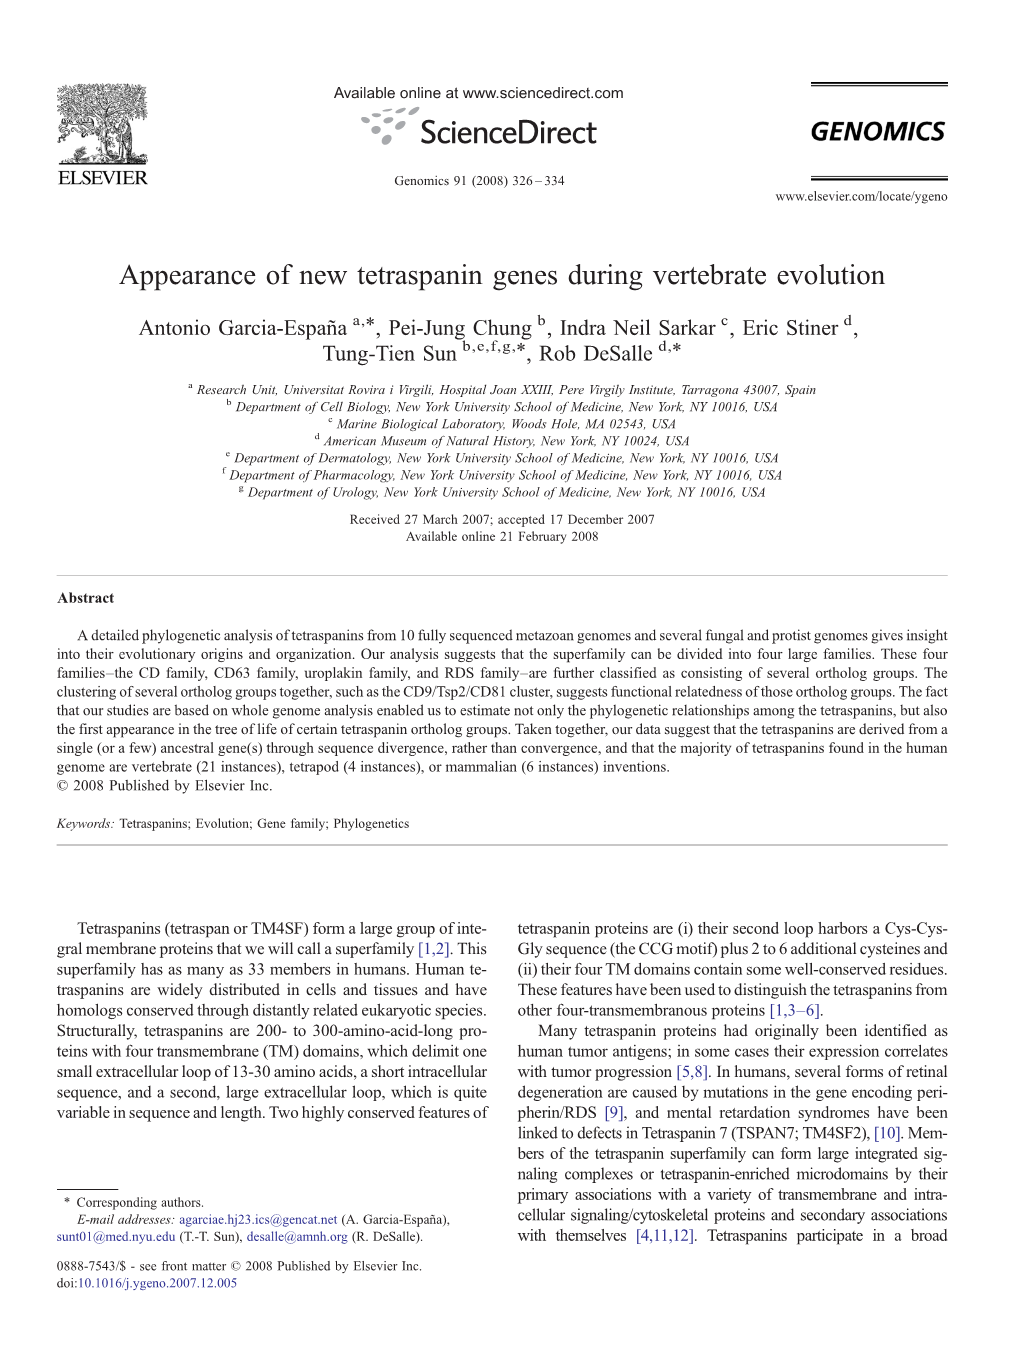 Appearance of New Tetraspanin Genes During Vertebrate Evolution